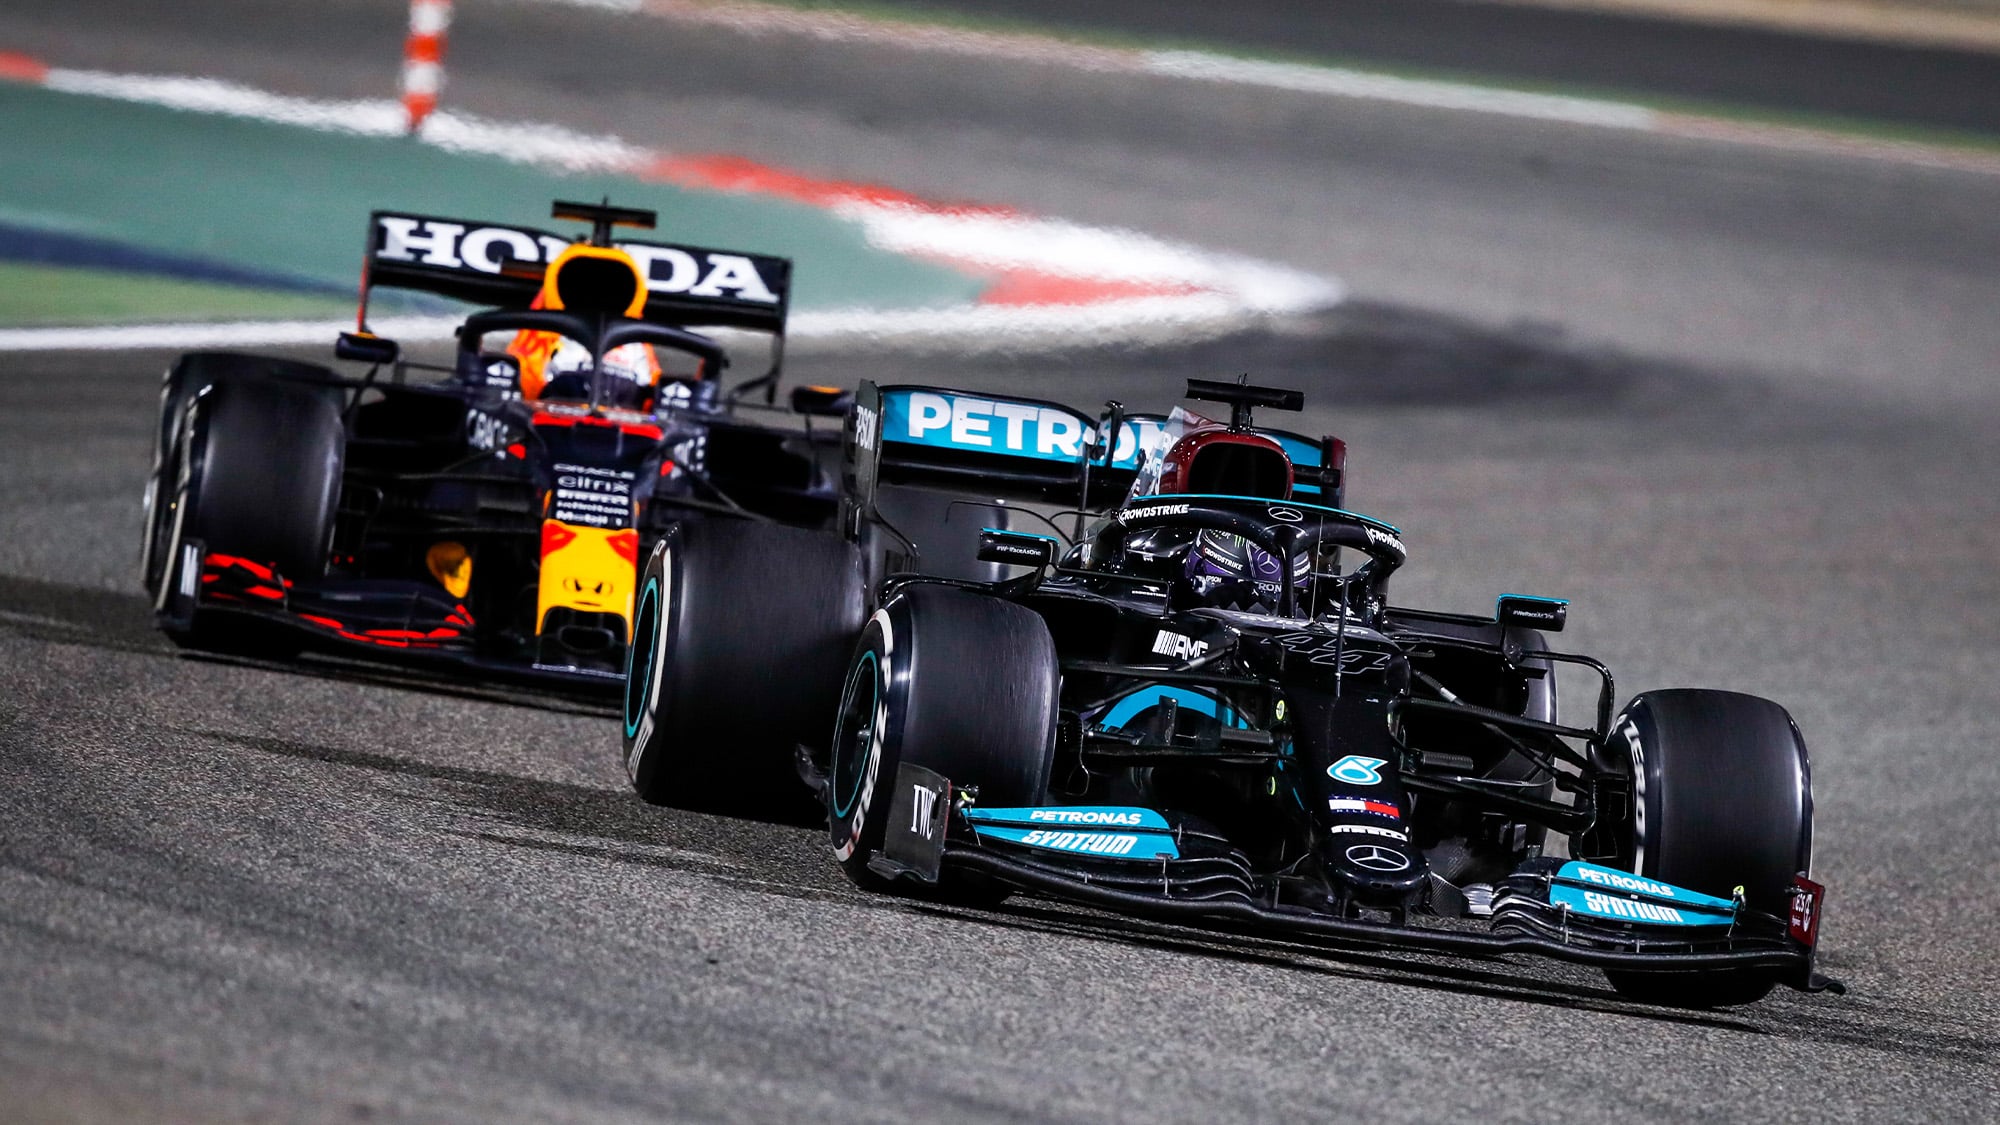 Hamilton holds off Verstappen in electric duel 2021 Bahrain GP lap by lap 